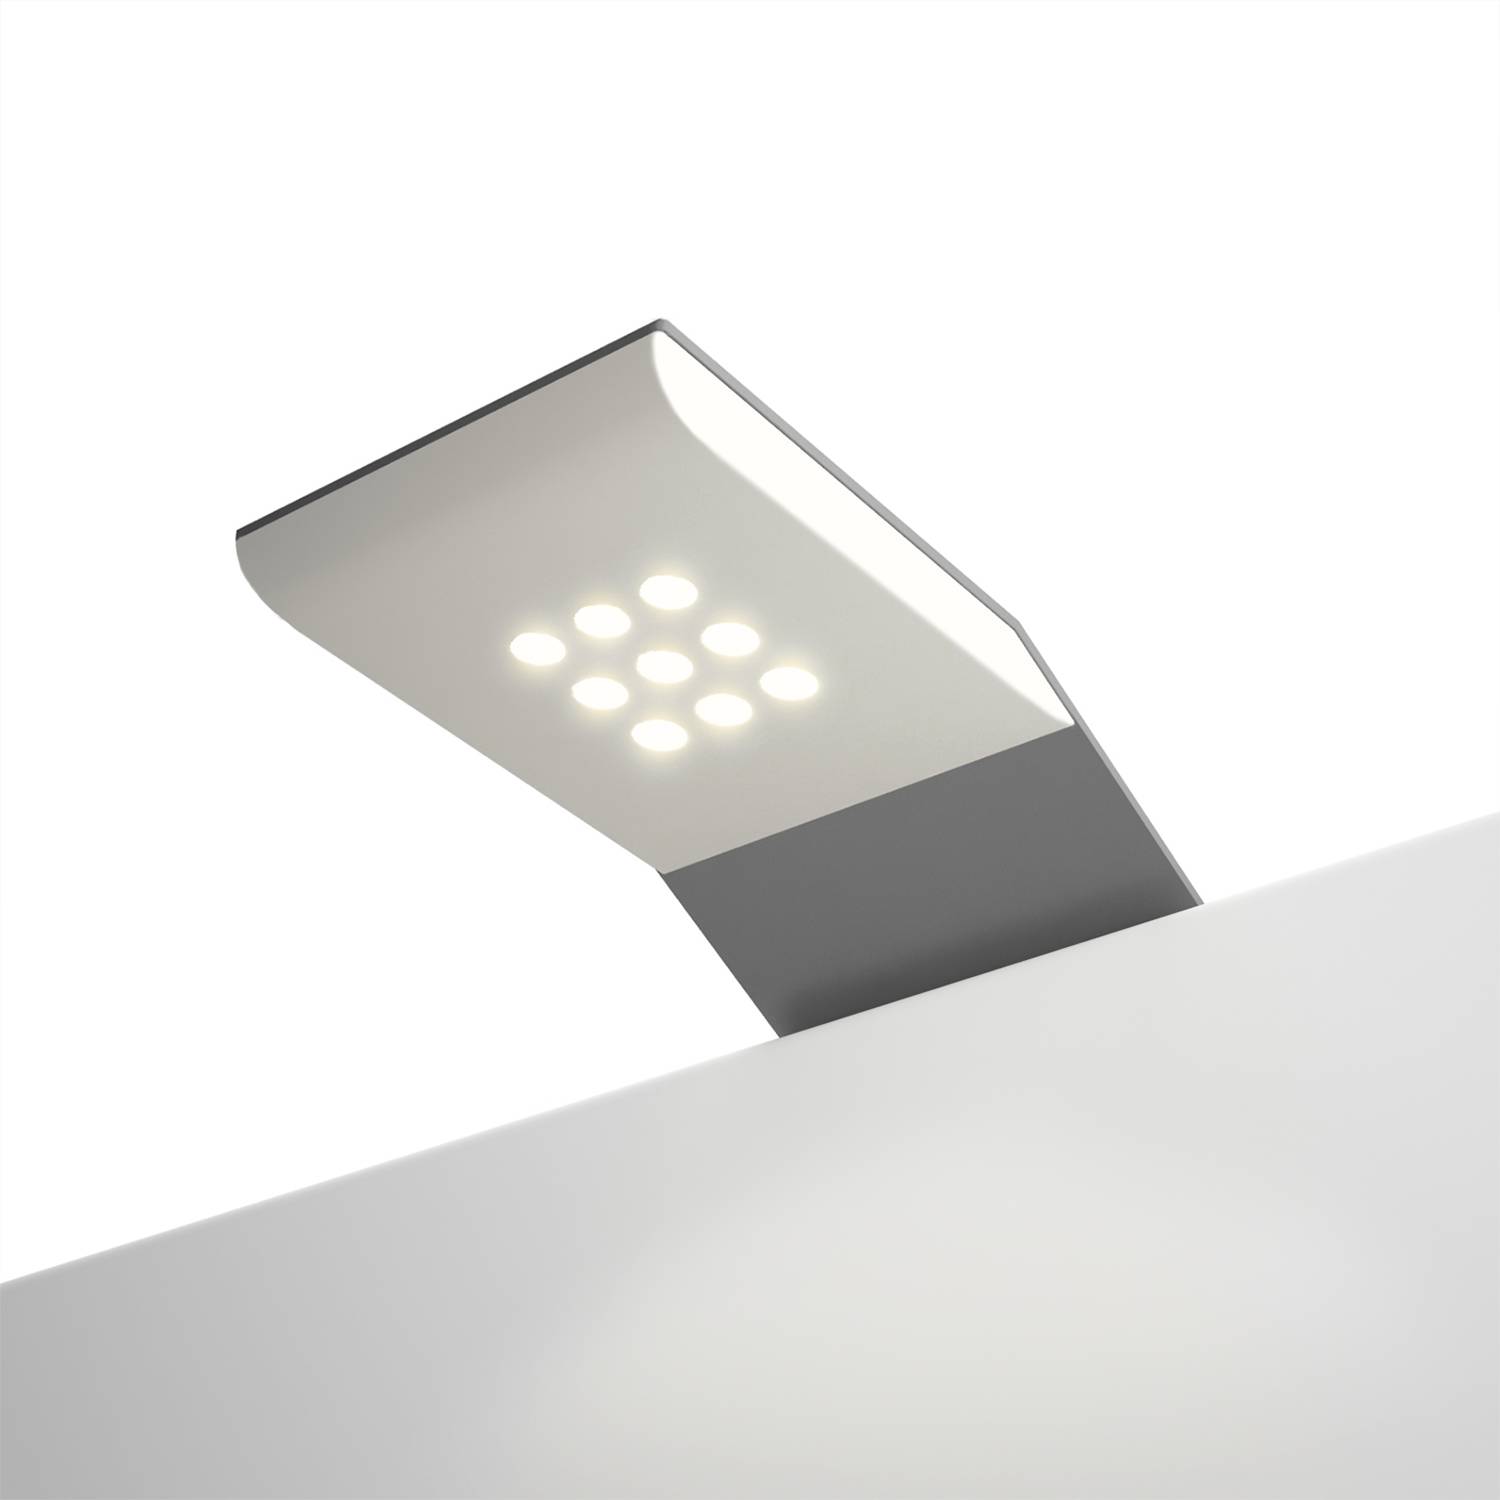 LED-Beleuchtung Skop III aus Aluminium als praktisches 3er-Set